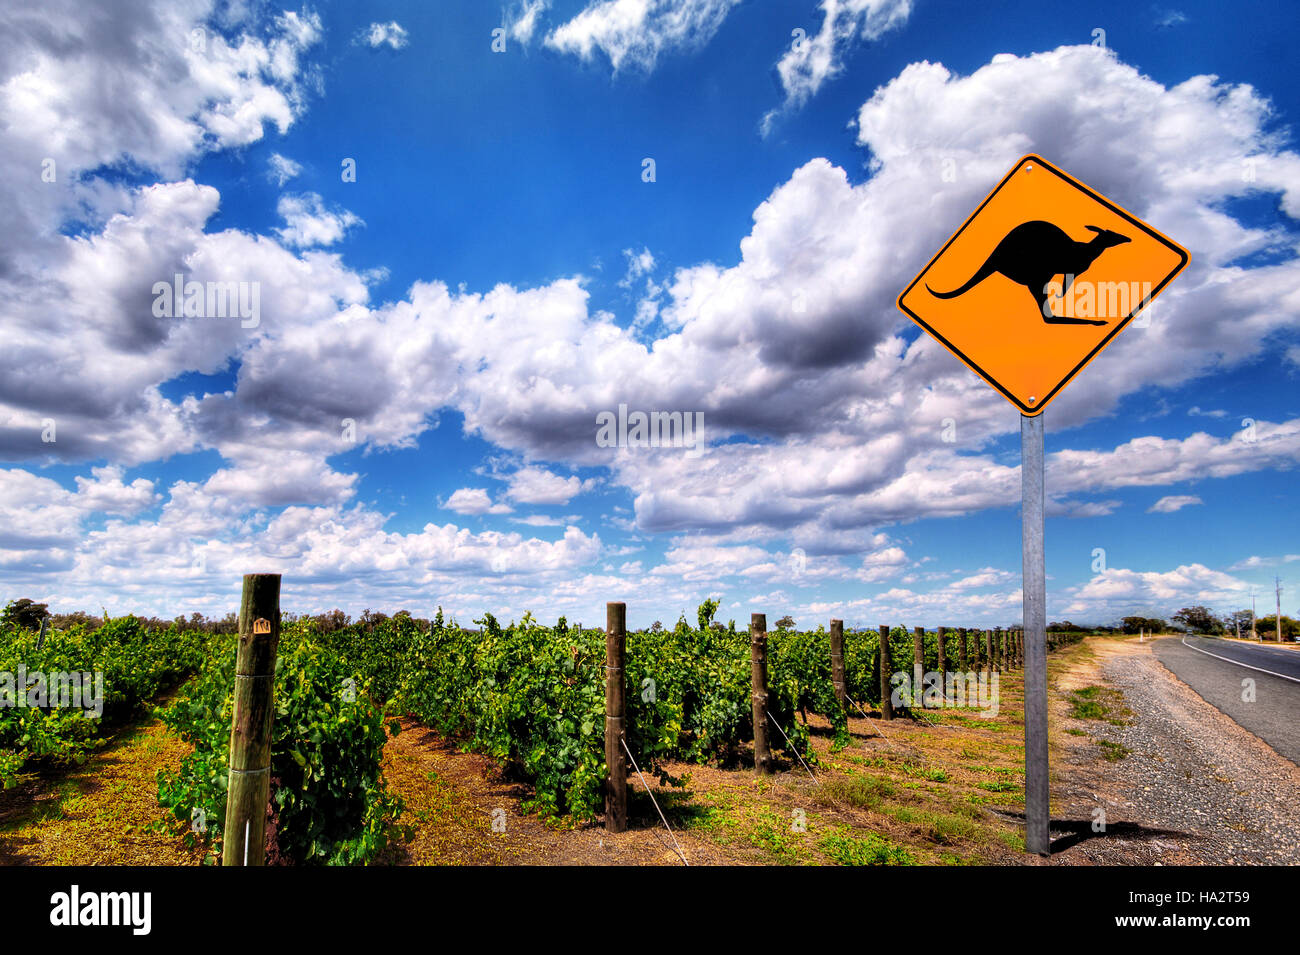 Kangaroo Warning Sign, vineyard and road, South Australia, Australia Stock Photo